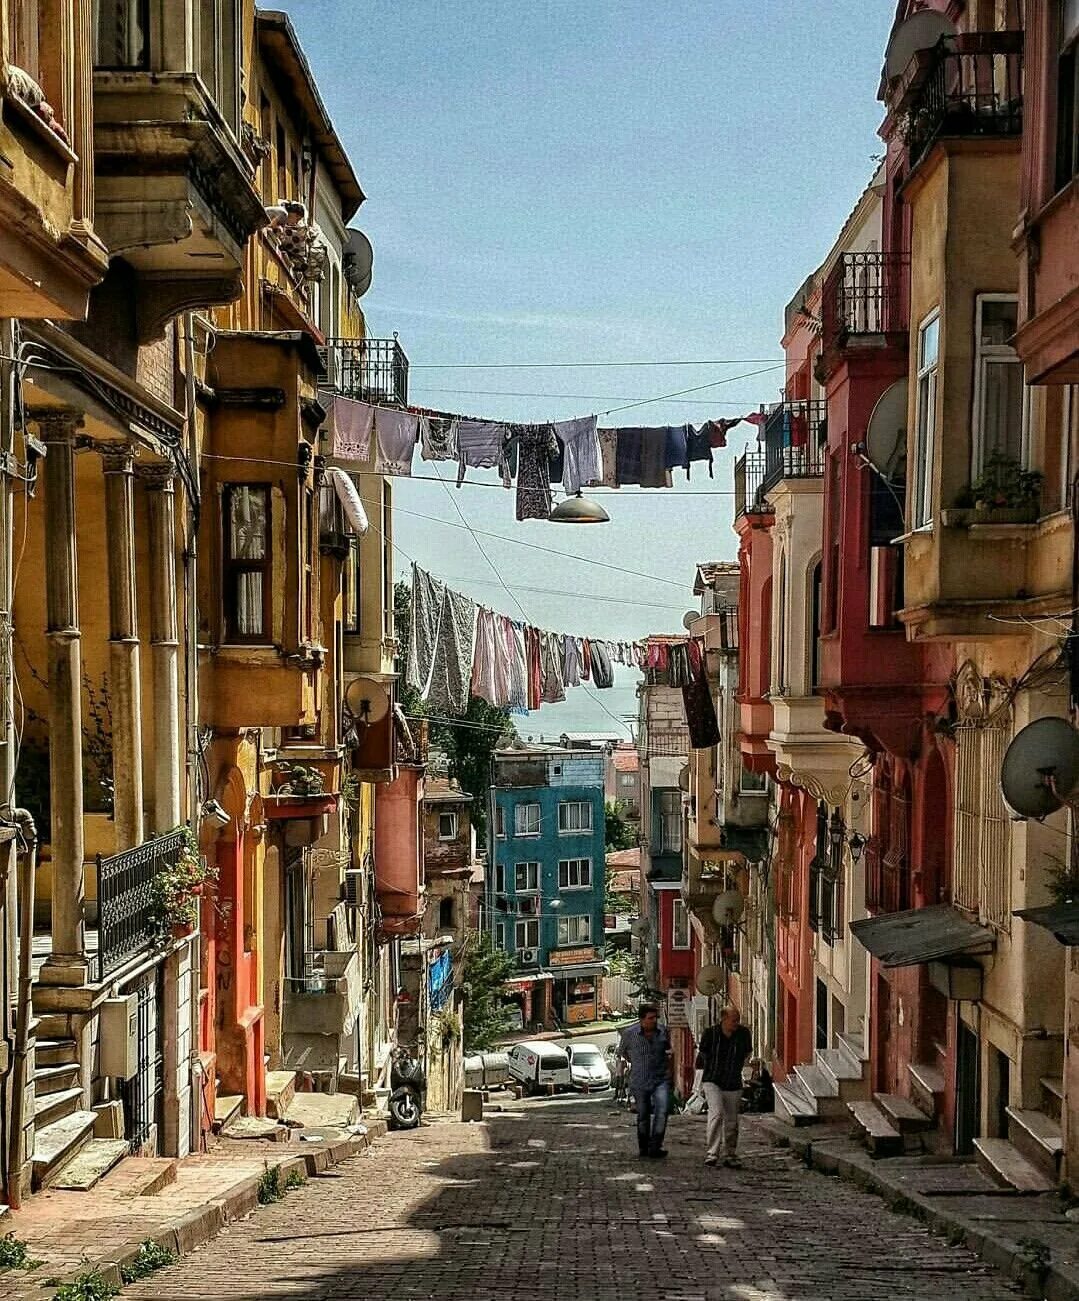 Стамбул старый город султанахмет. Улочки Стамбула старый город. Город Балат Турция. Стамбул старый город Бейоглу. Стамбул улочки Султанахмет.